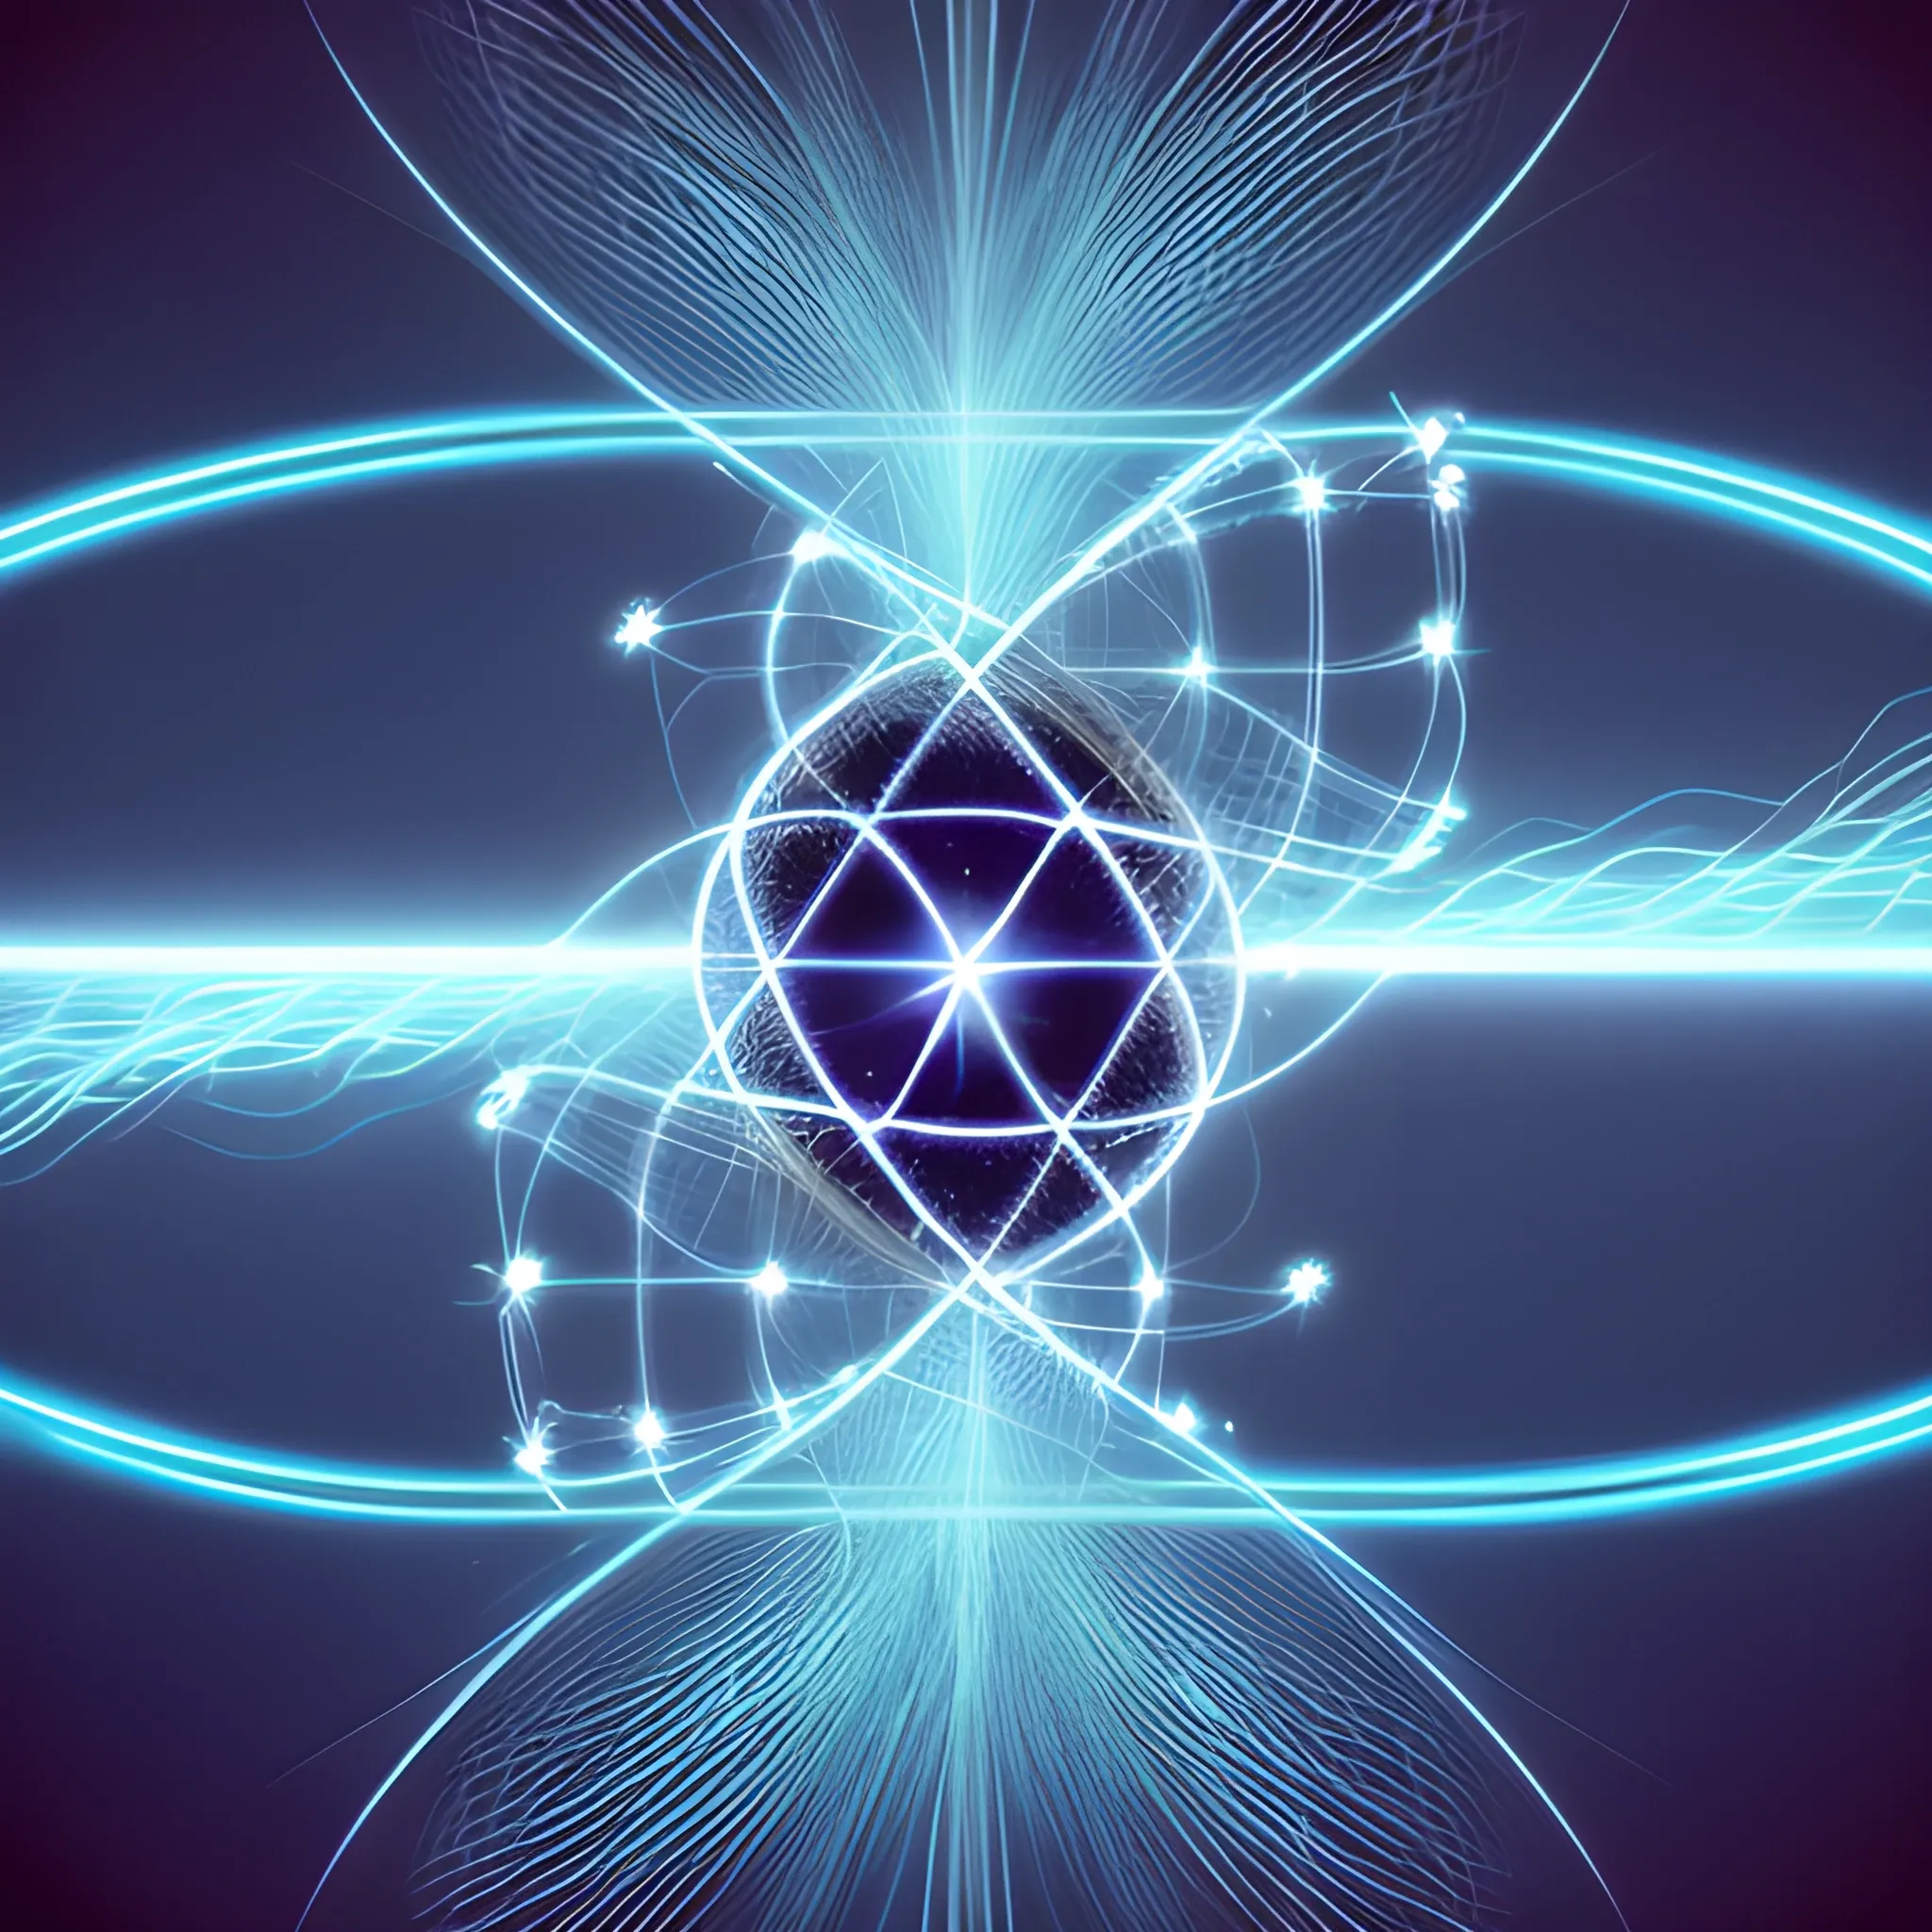 quantum entanglement - Arthub.ai